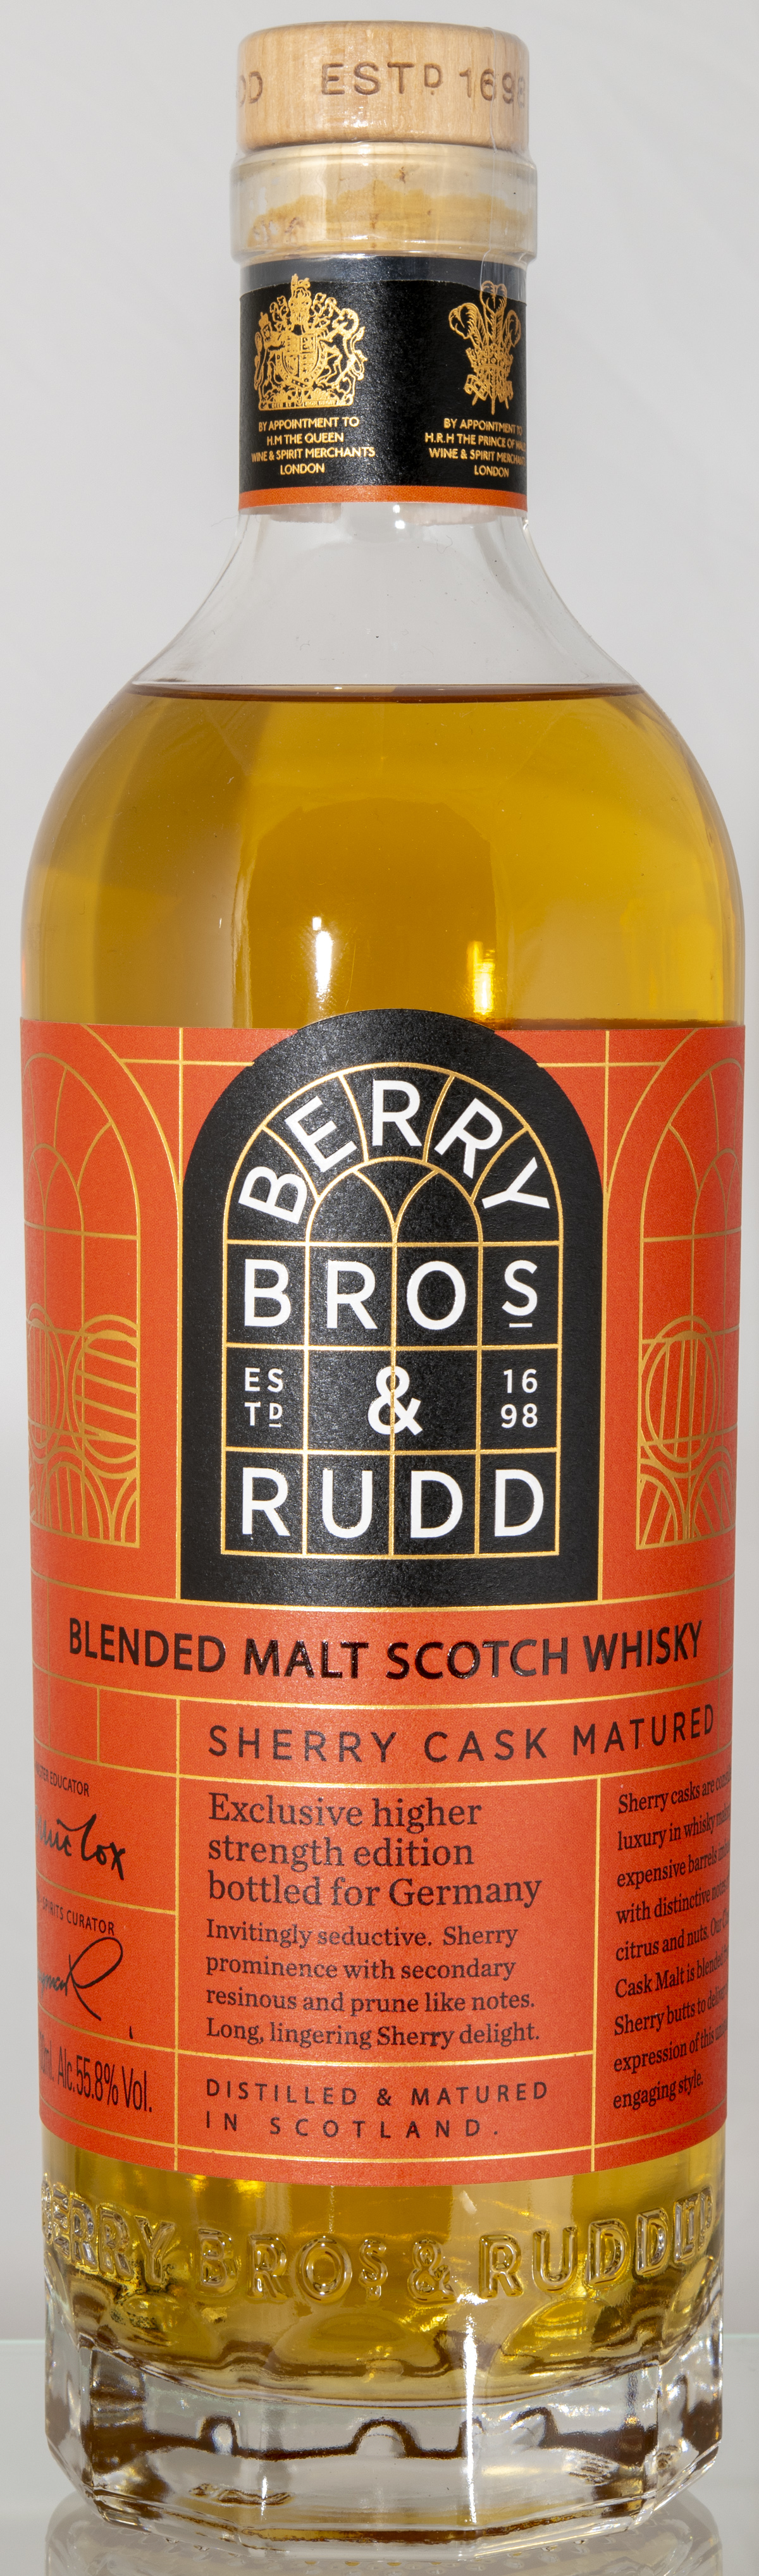 Billede: D85_8305 - Berry Bros and Rudd - Sherry Cask Matured - bottle front.jpg